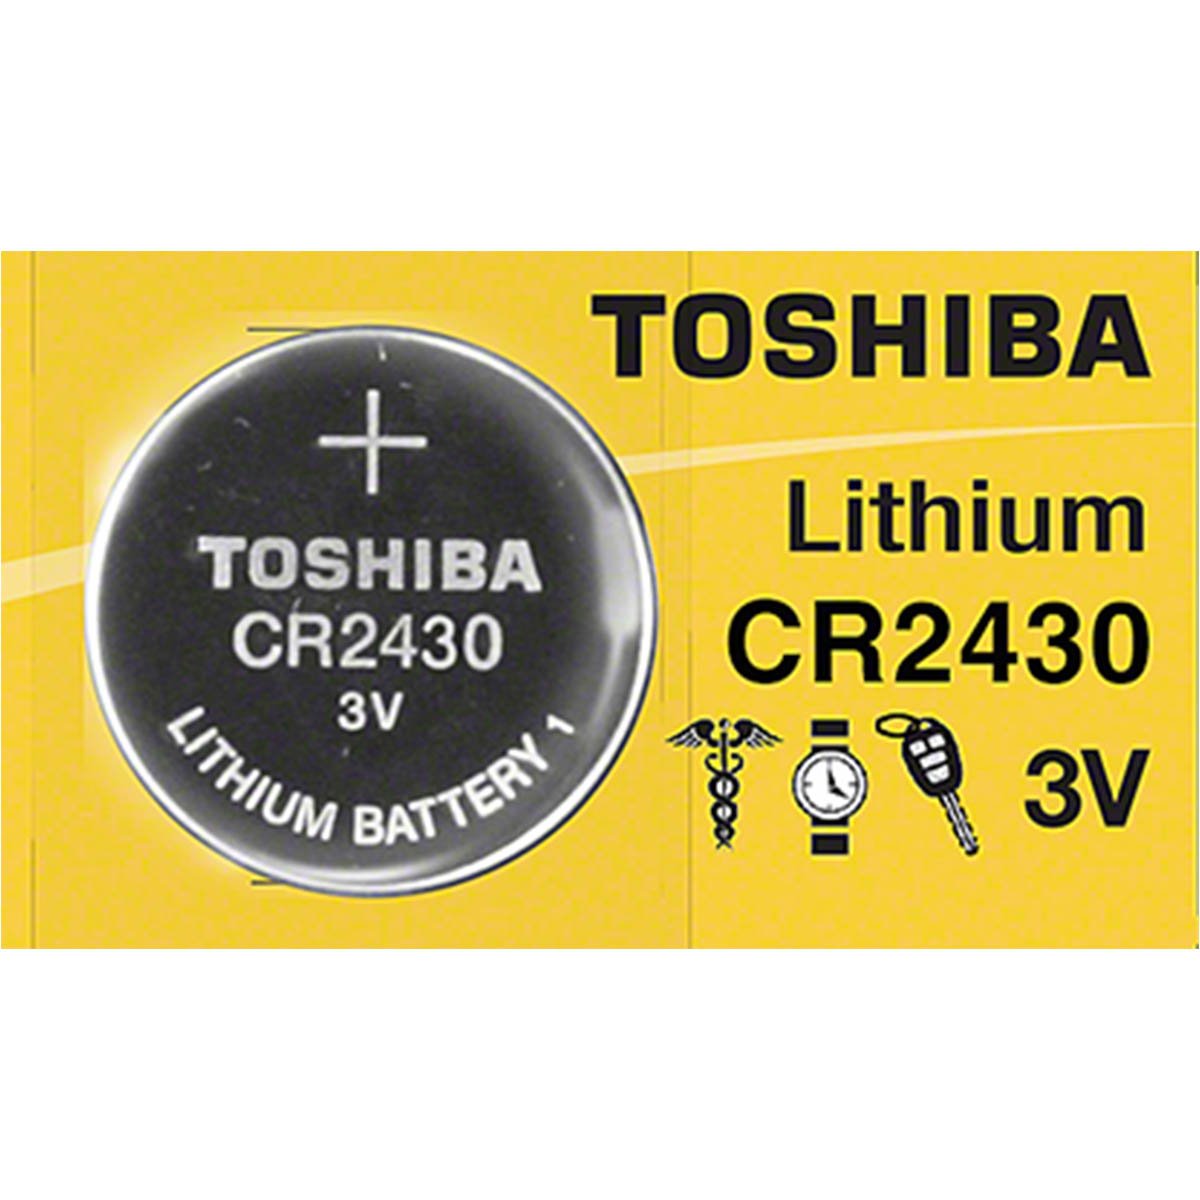 Toshiba CR2430 Battery 3V Lithium Coin Cell  (1PC)